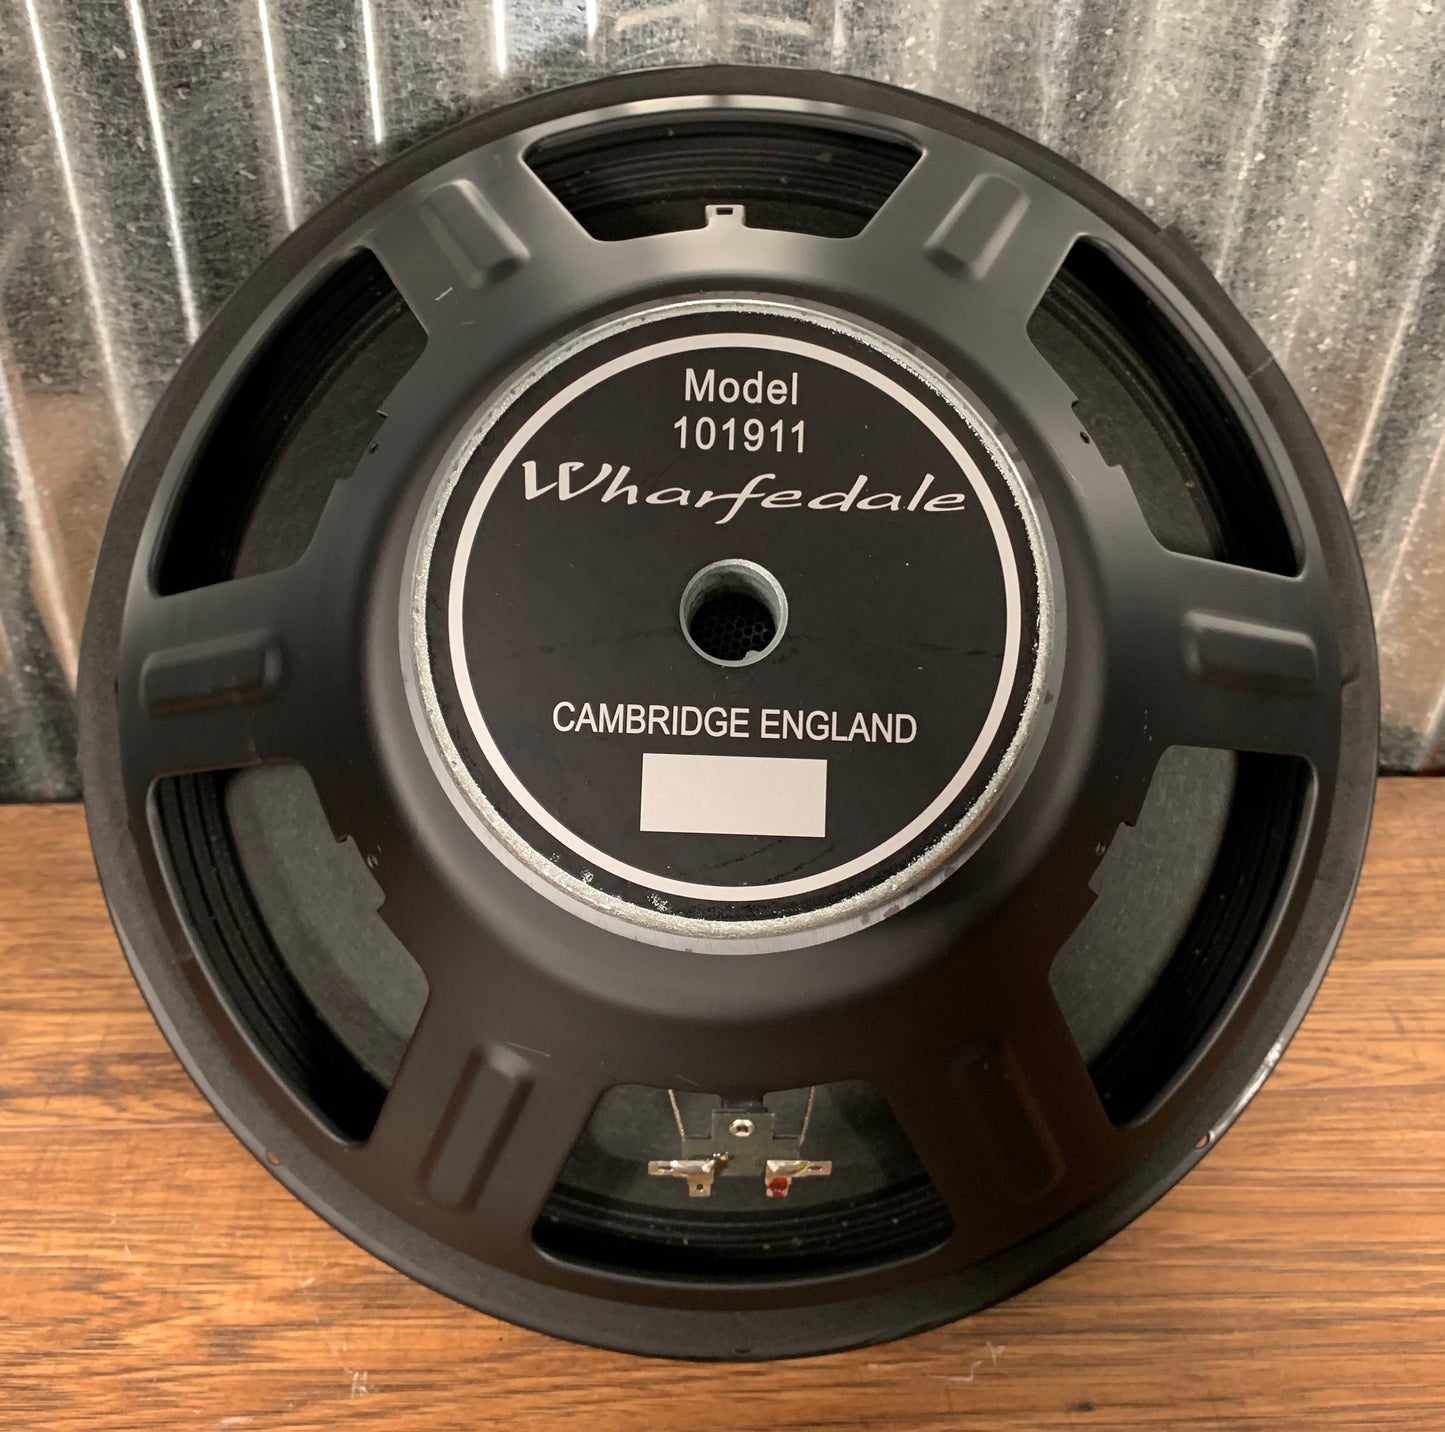 Wharfedale Pro D-135 15" 300 Watt 8 Ohm Replacement Bass Woofer Speaker